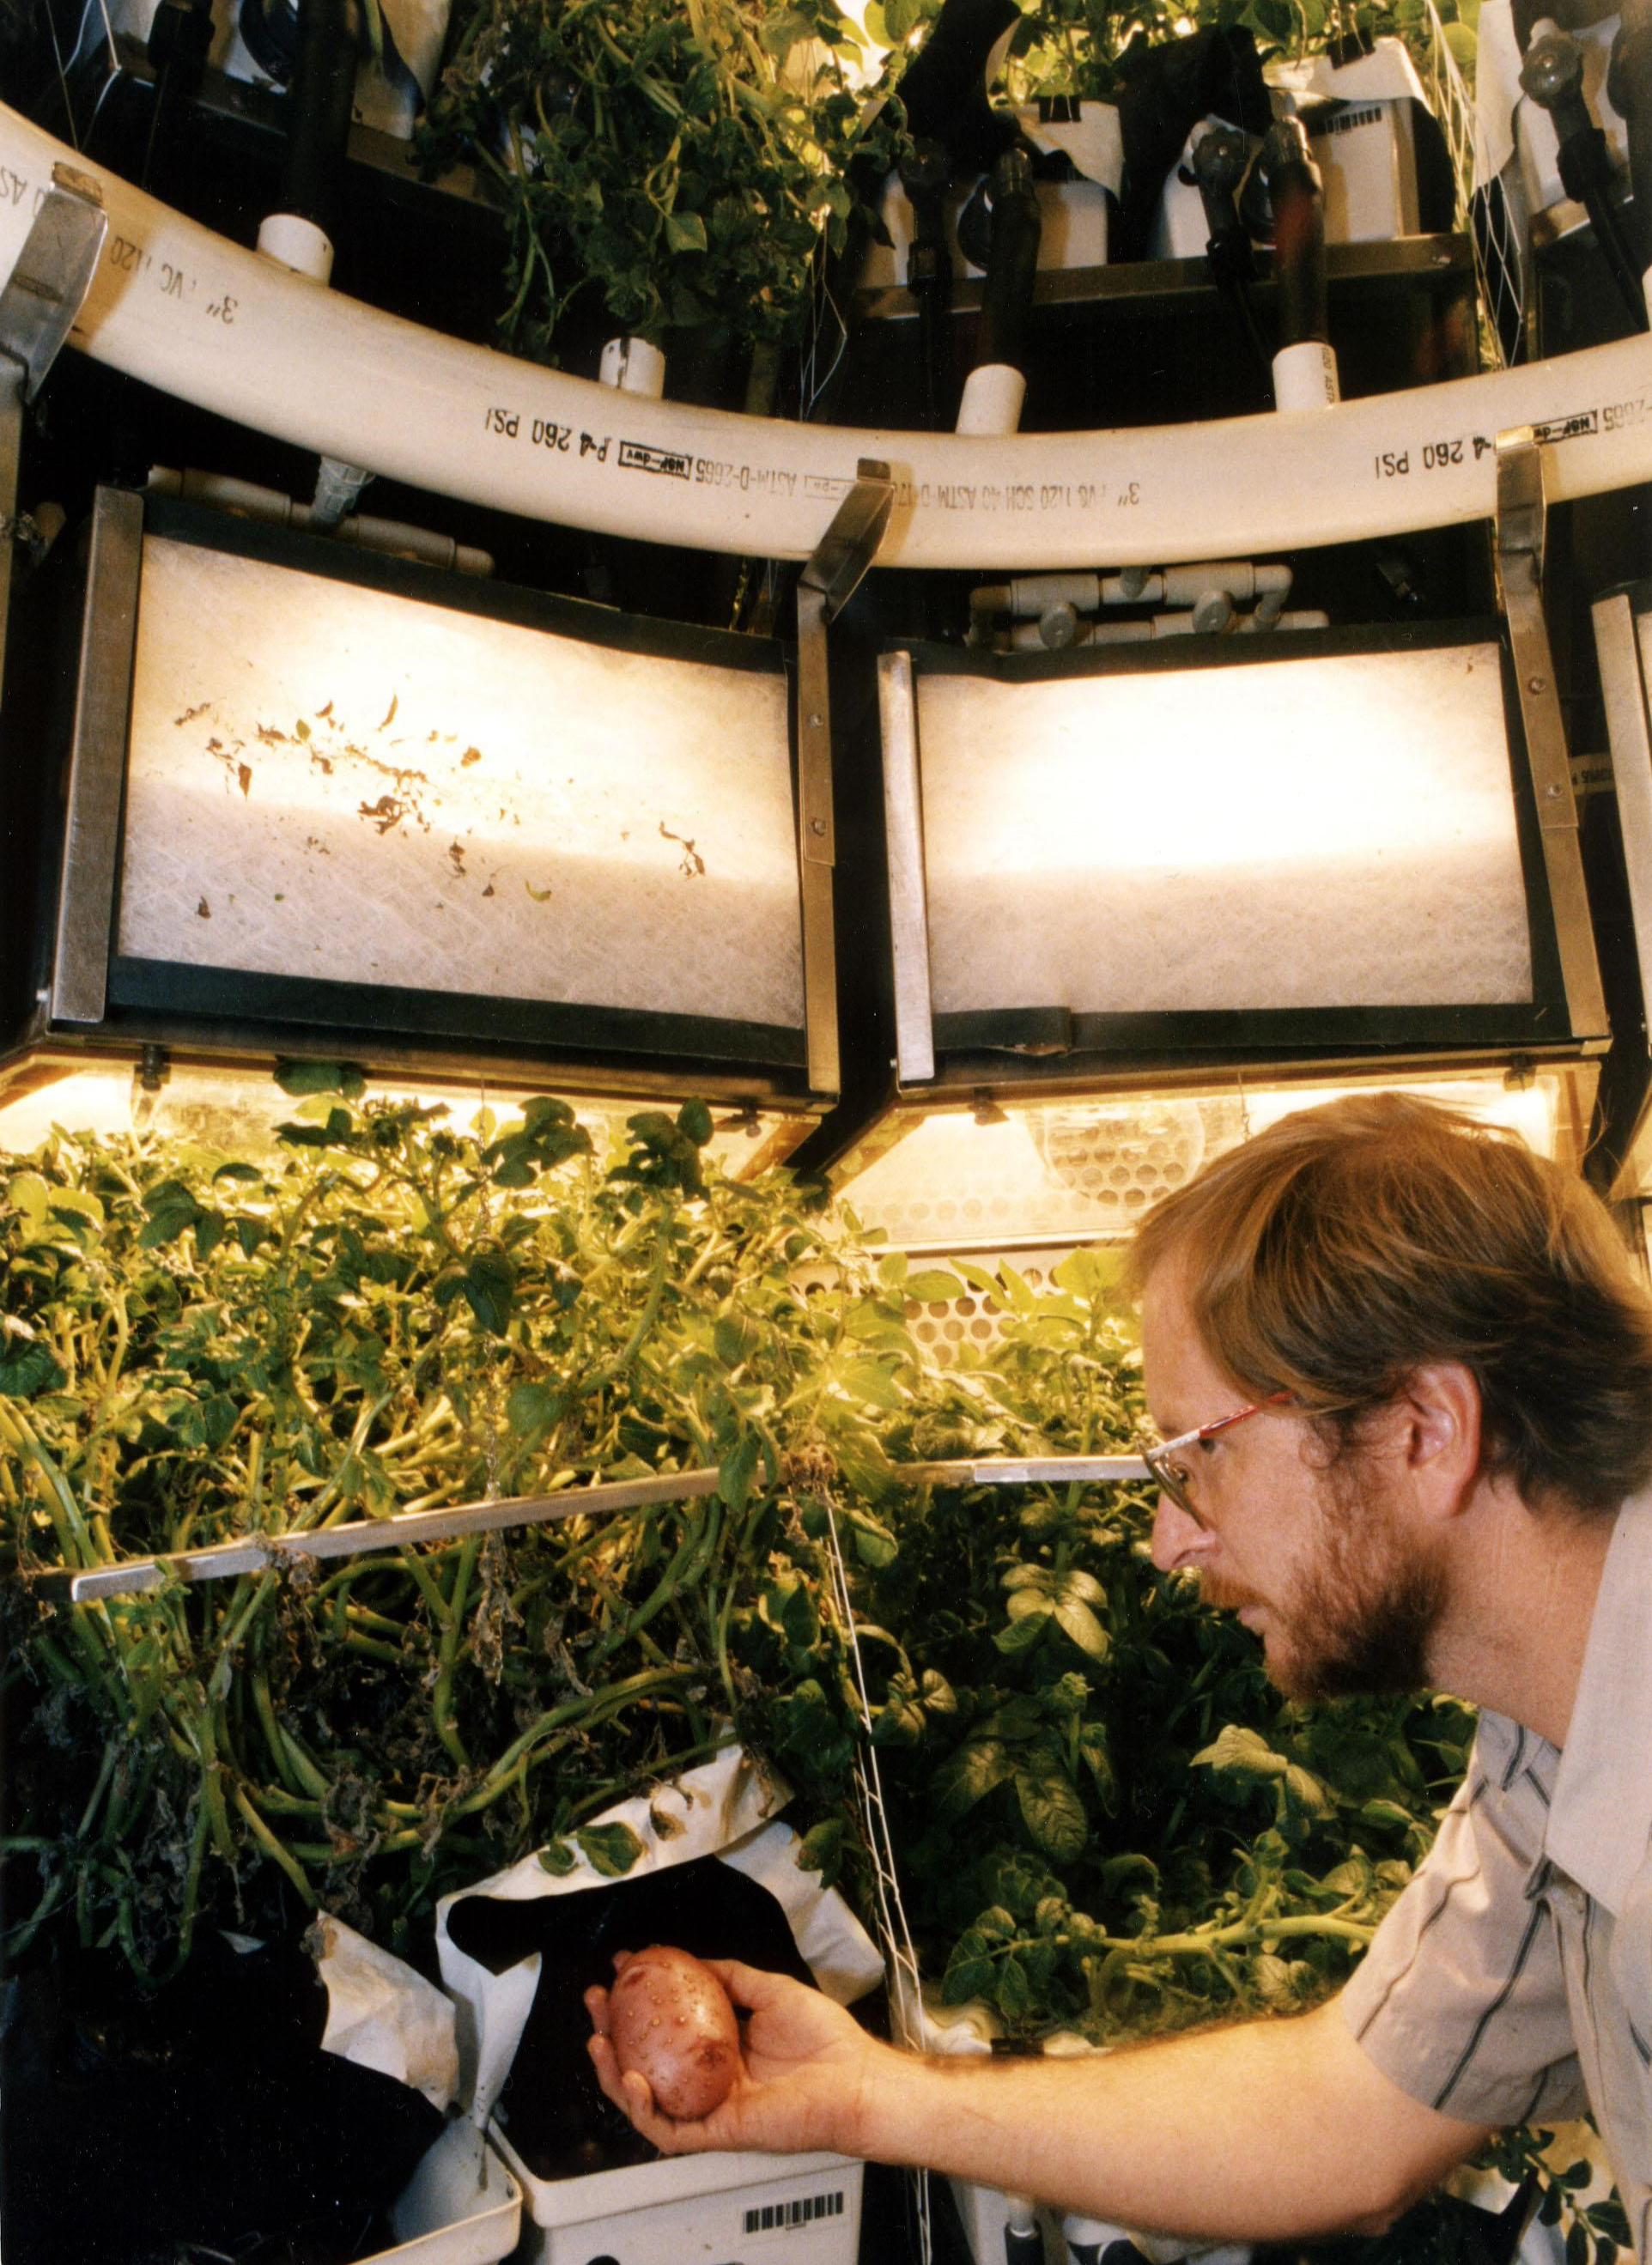 A NASA researcher examines potato plants.